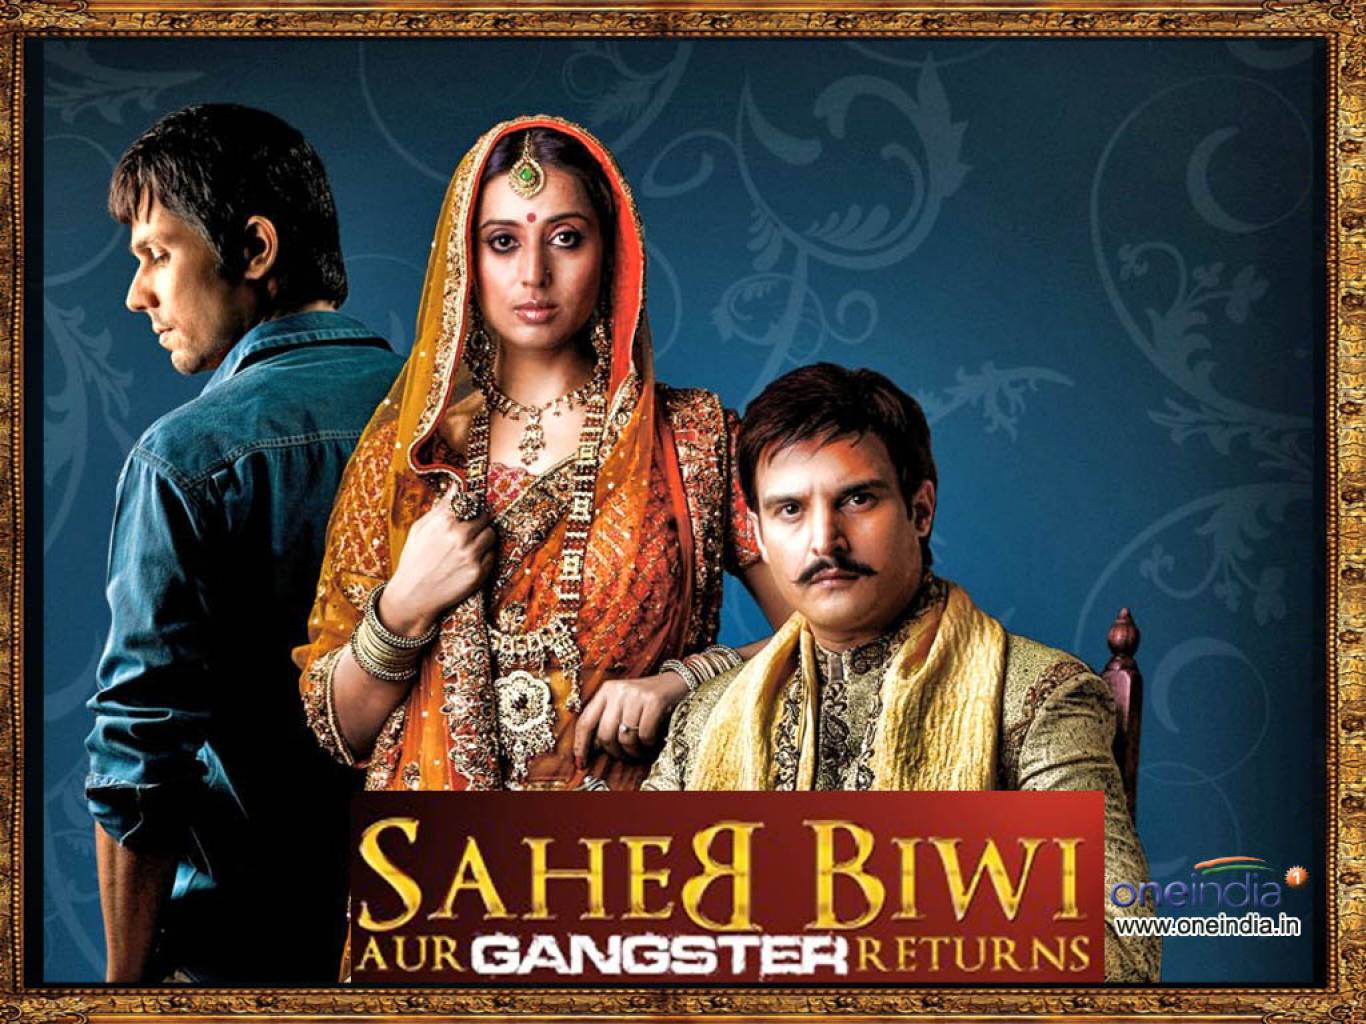 Saheb Biwi Aur Gangster Returns Movie HD Wallpaper. Saheb Biwi Aur Gangster Returns HD Movie Wallpaper Free Download (1080p to 2K)